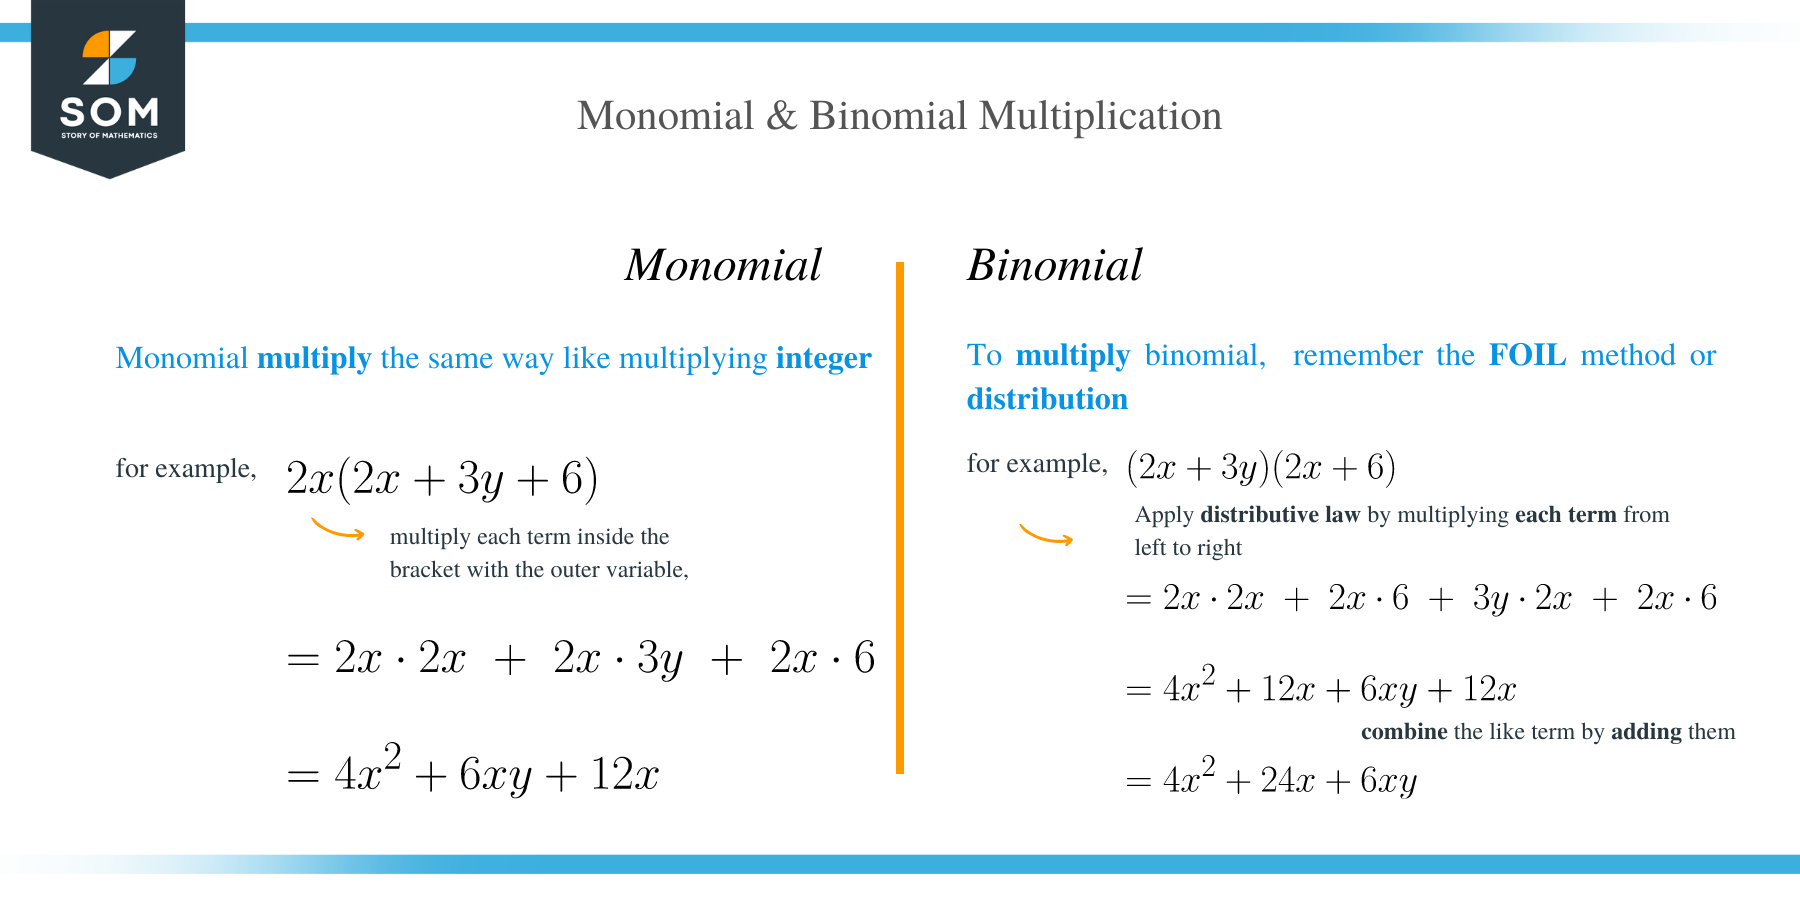 Multiplying mono and bino multiplication